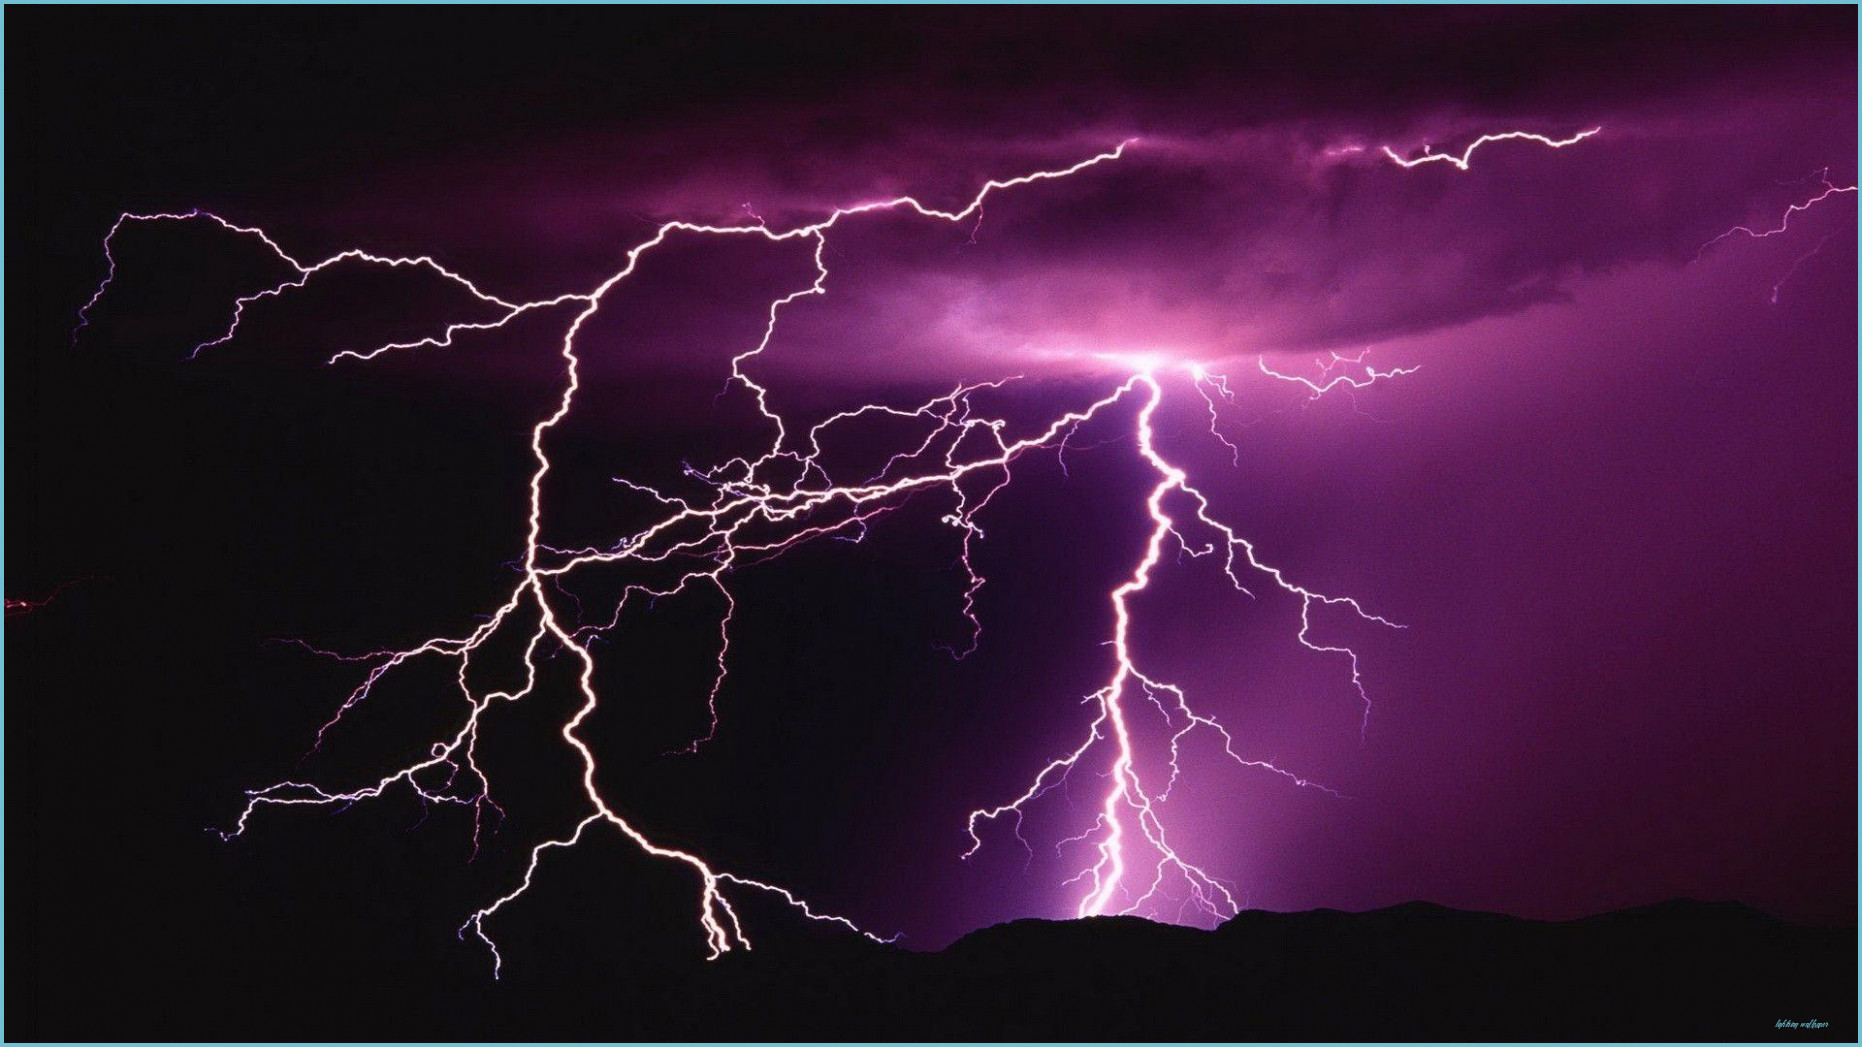 Wallpaper Atmosphere Purple Lightning Cloud Darkness Background   Download Free Image